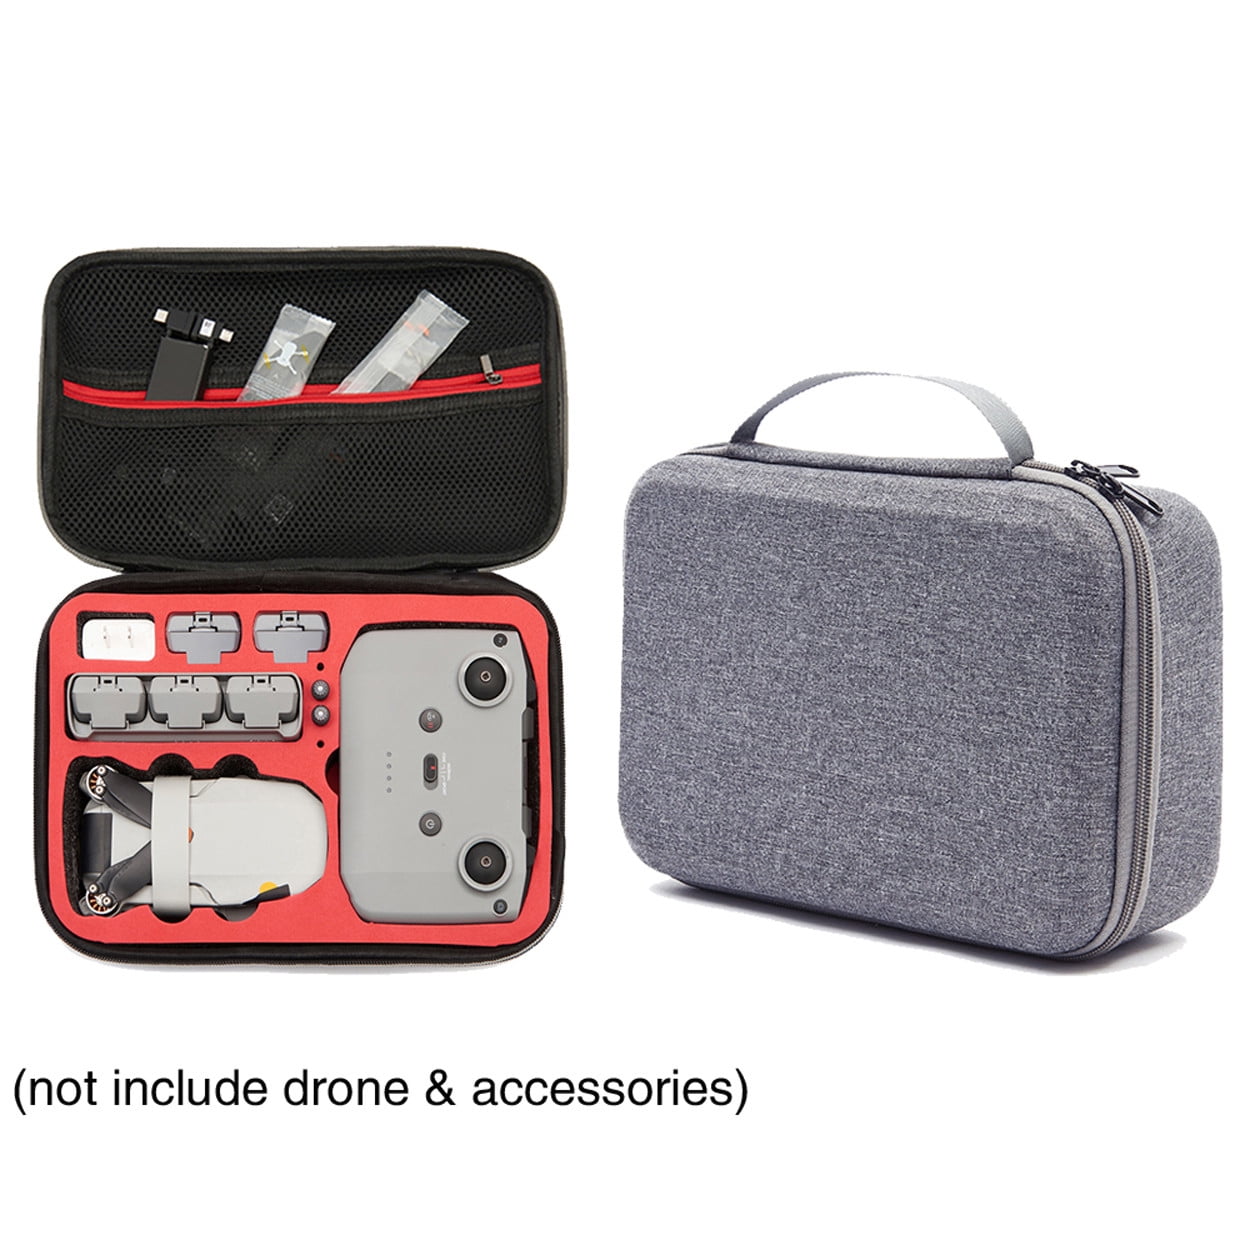 Mavic Mini 2 Case Storage Bag,Safety Box Waterproof Storage Clutch Bag Hard Carrying Case for DJI Mavic Mini 2 Accessory